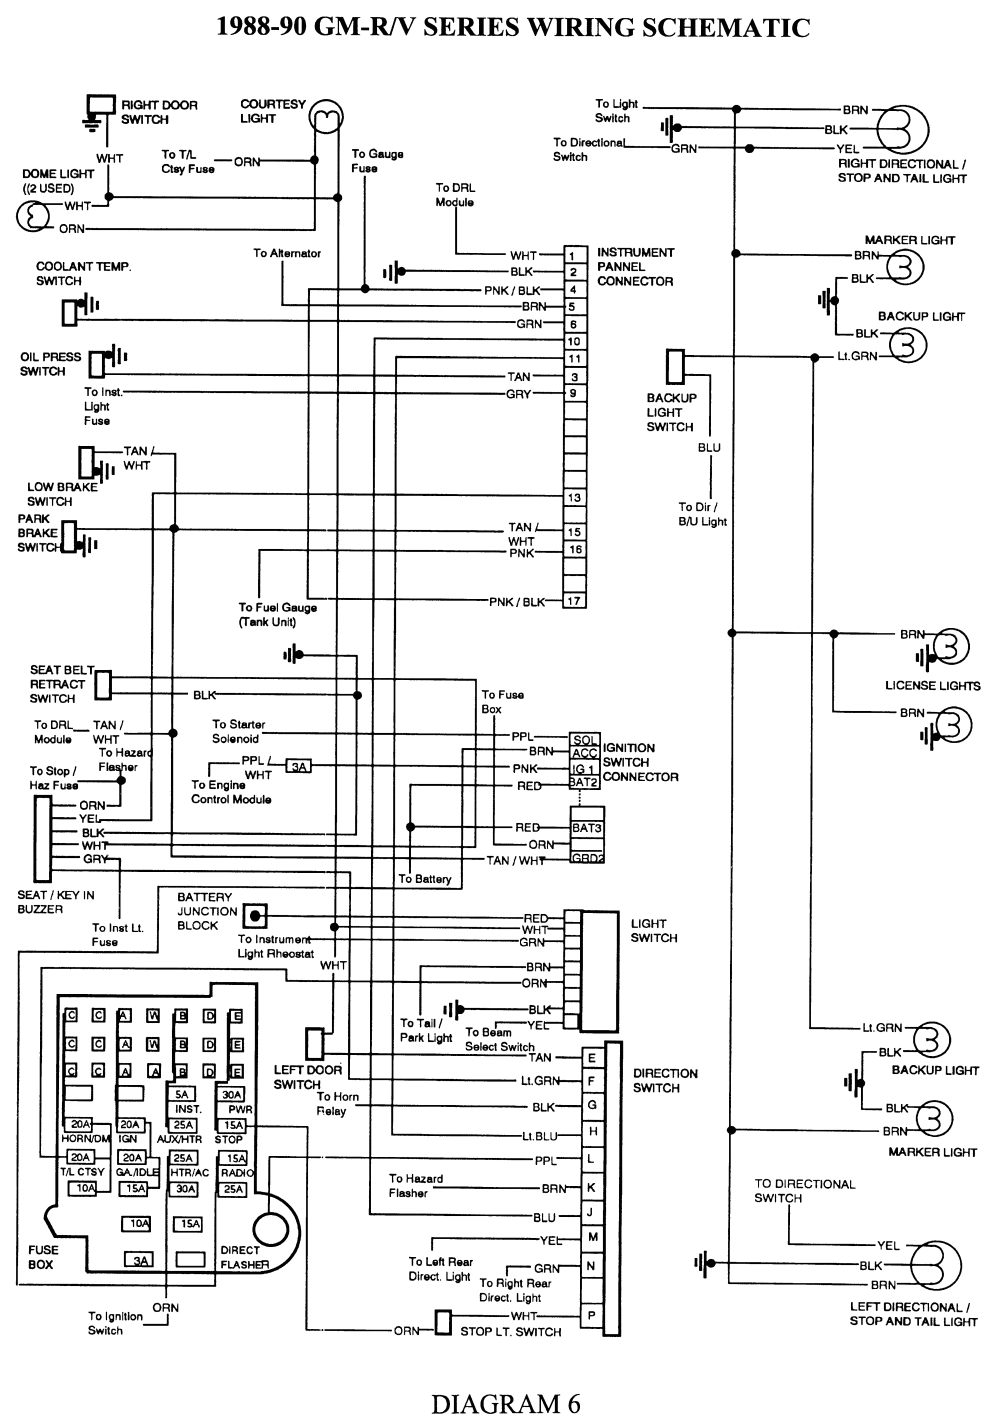 88 chevy truck wiring diagram wiring diagram blog 1988 chevy turn signal wiring diagram